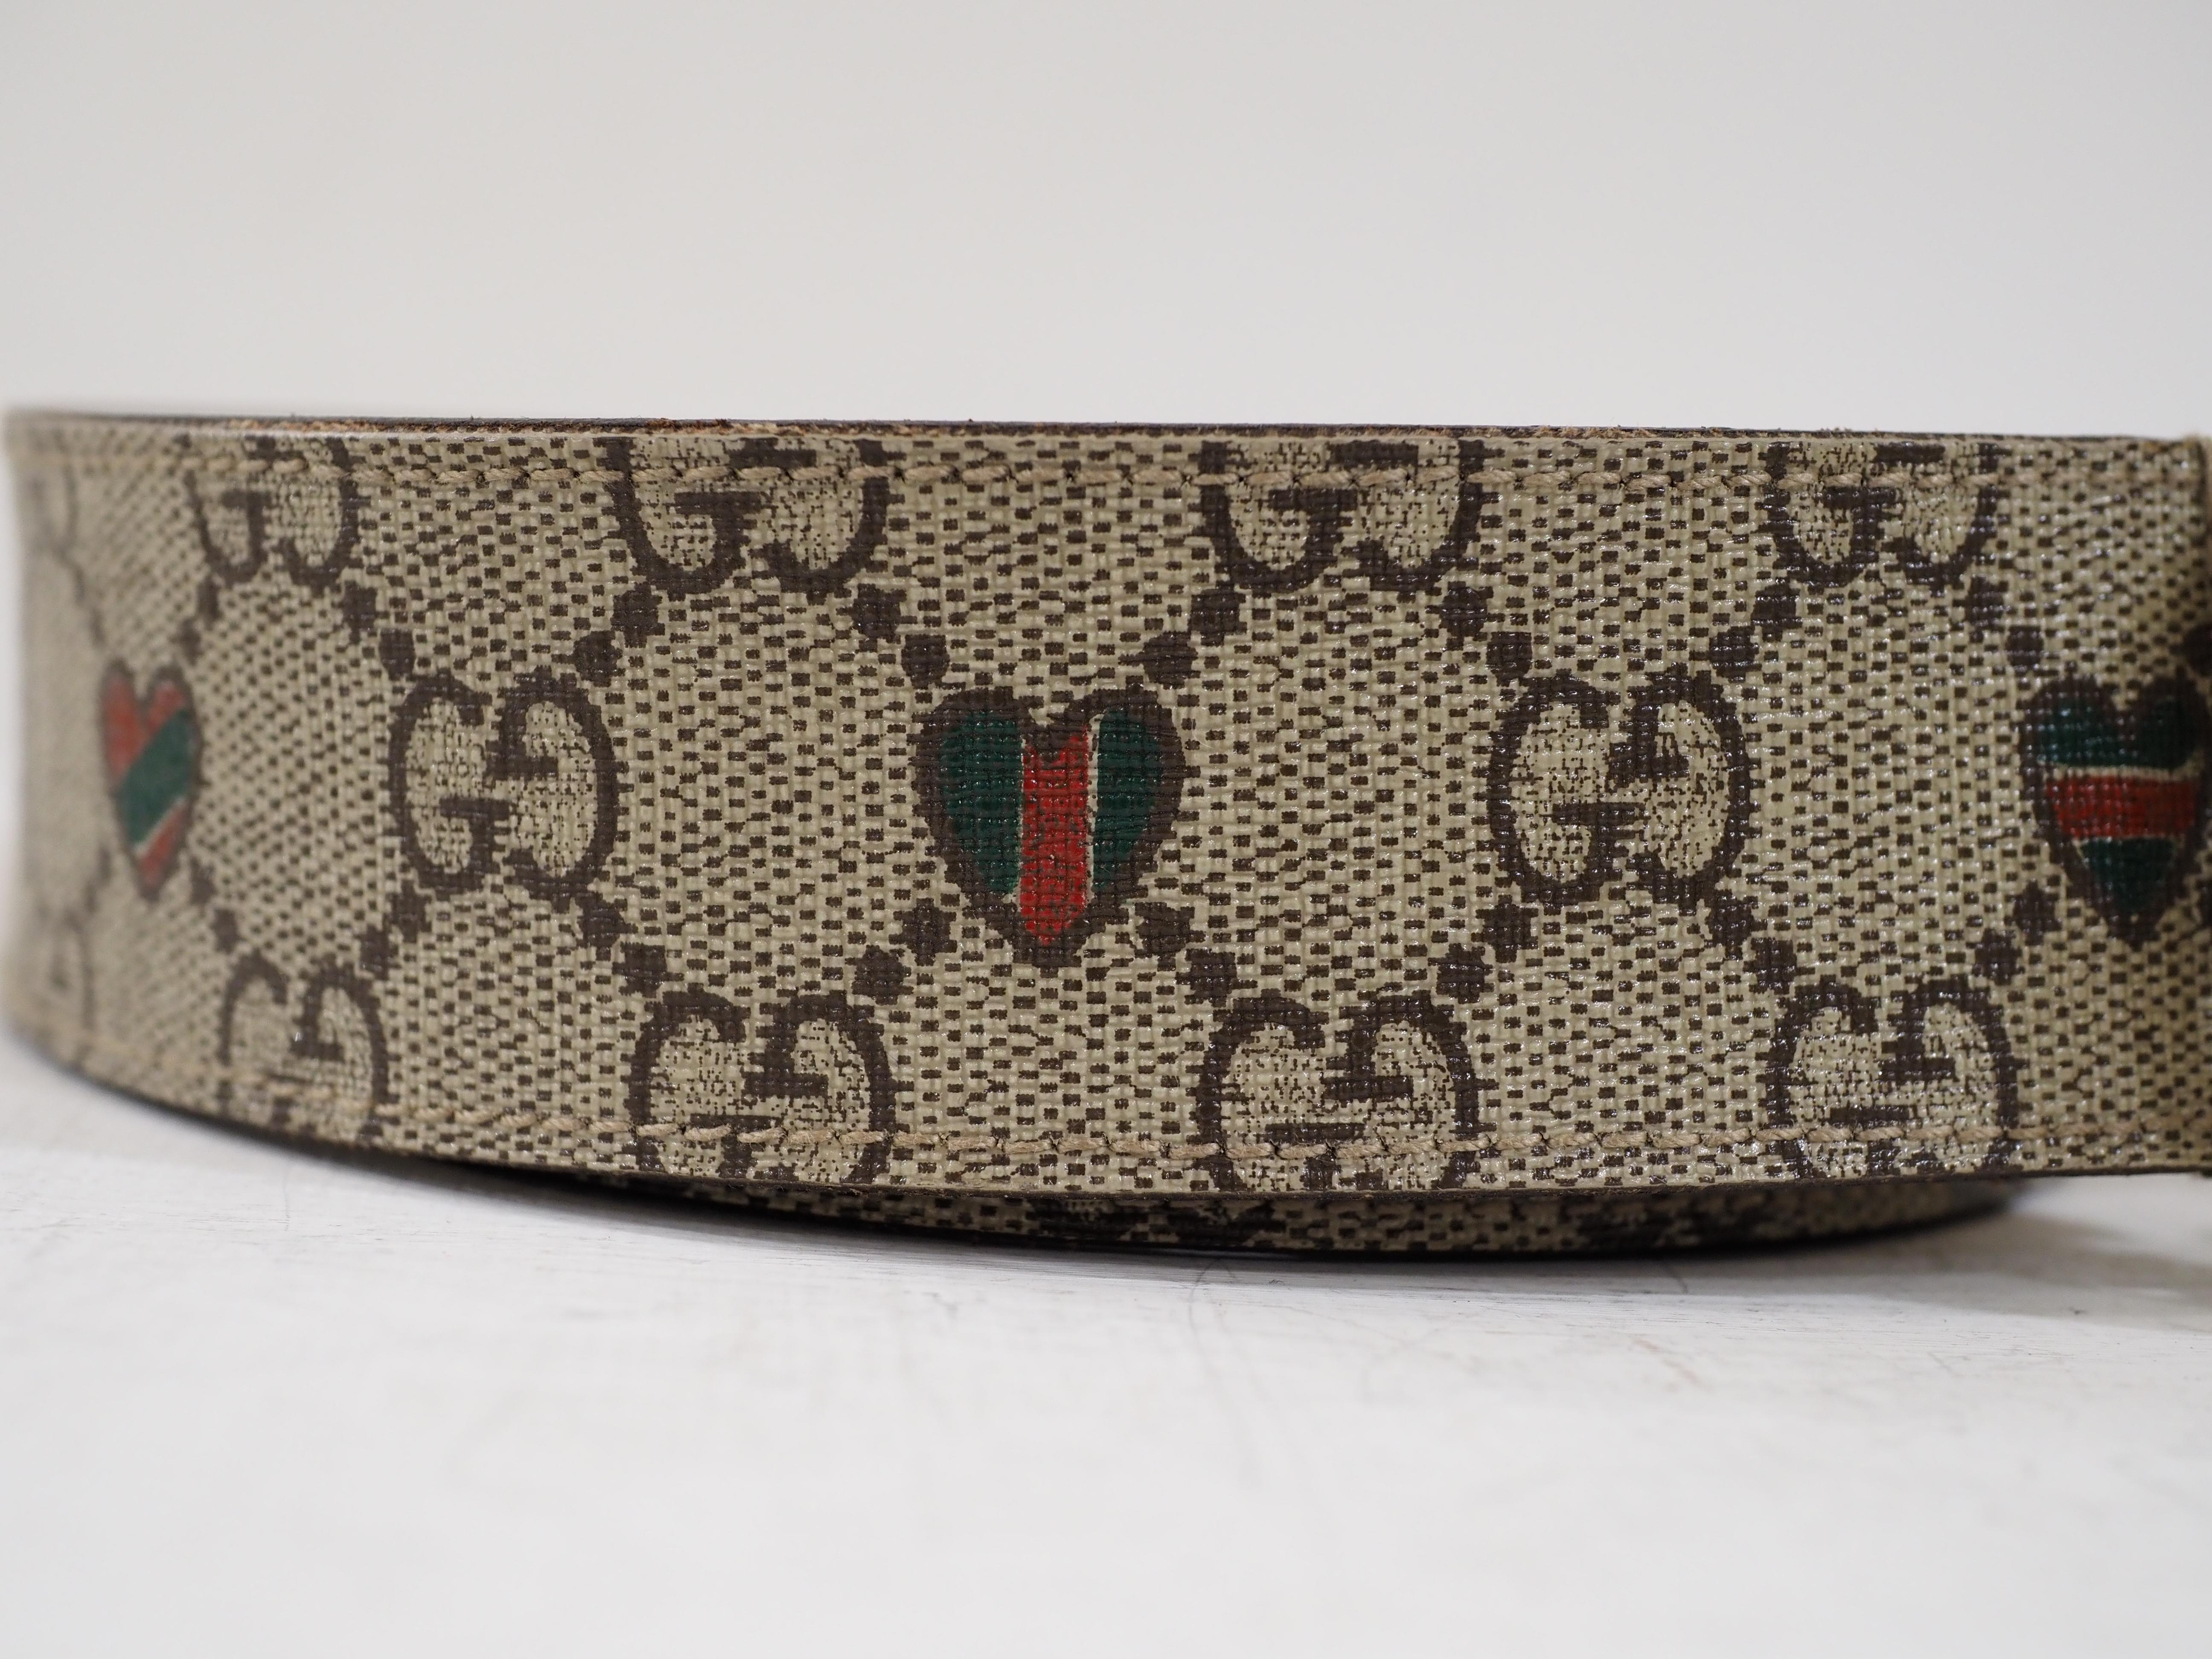 Gucci monogram belt
size 80 cm